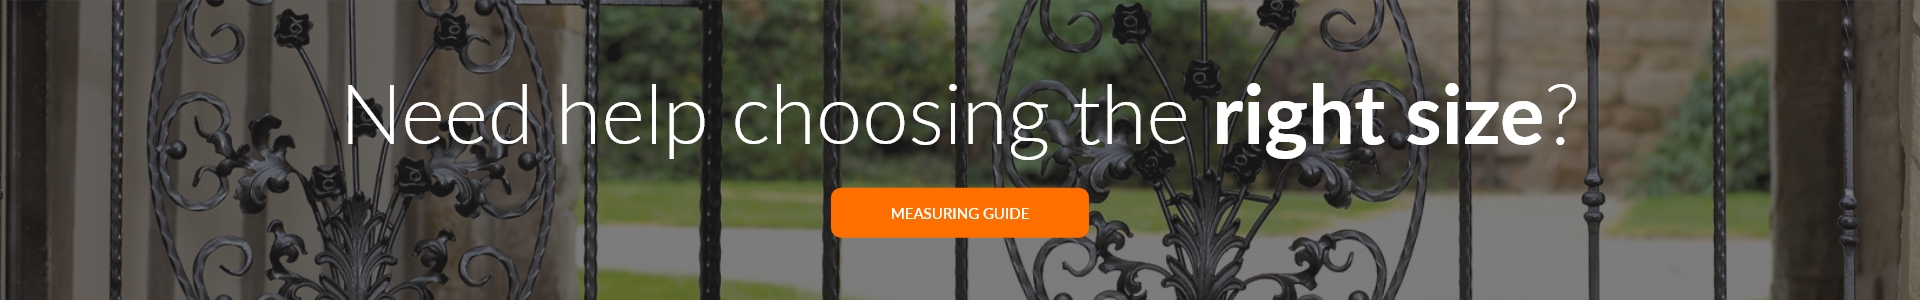 View the metal railing measuring guide